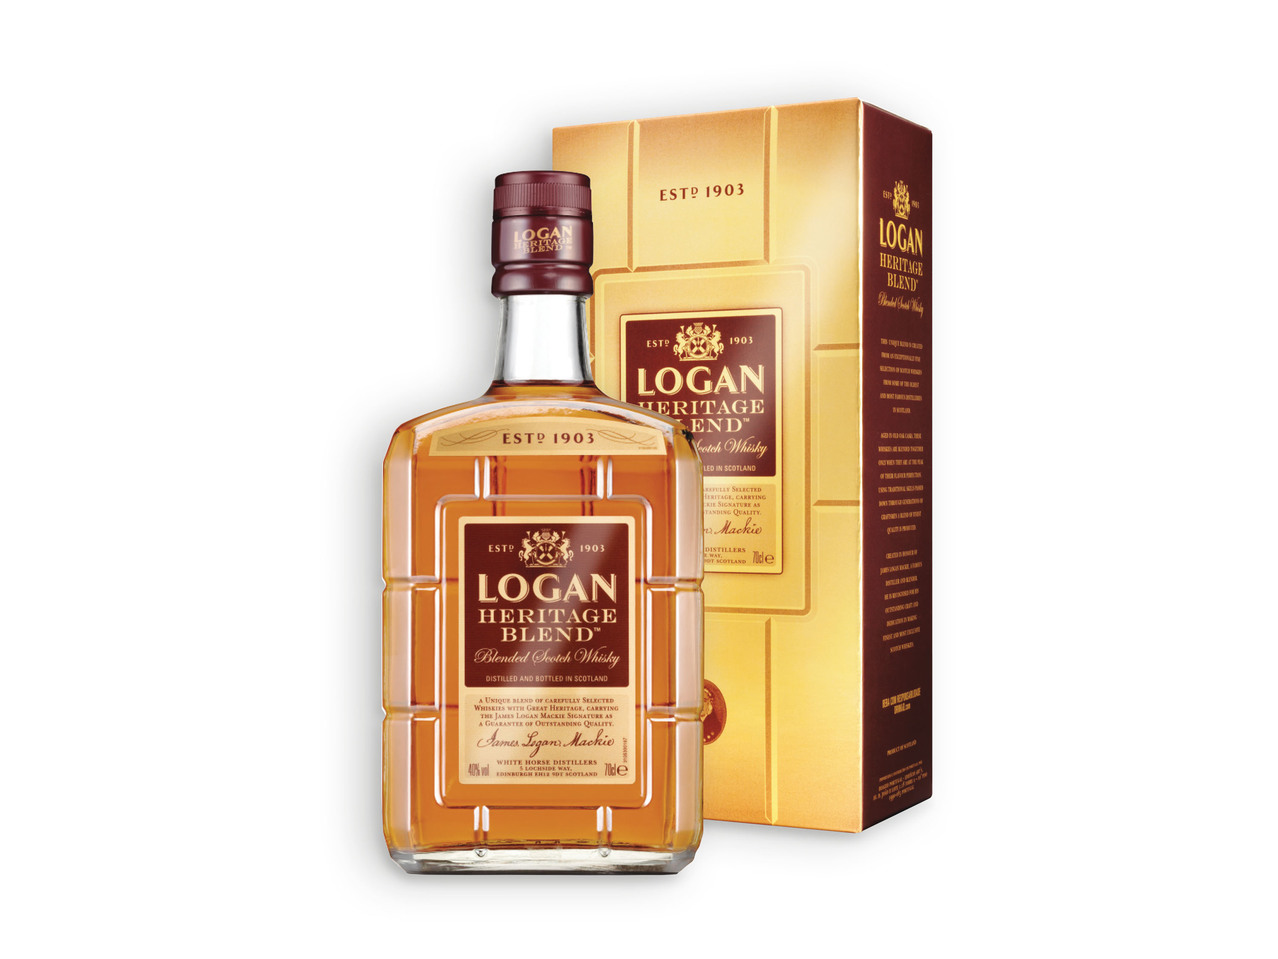 LOGAN(R) Scotch Whisky Heritage Blend